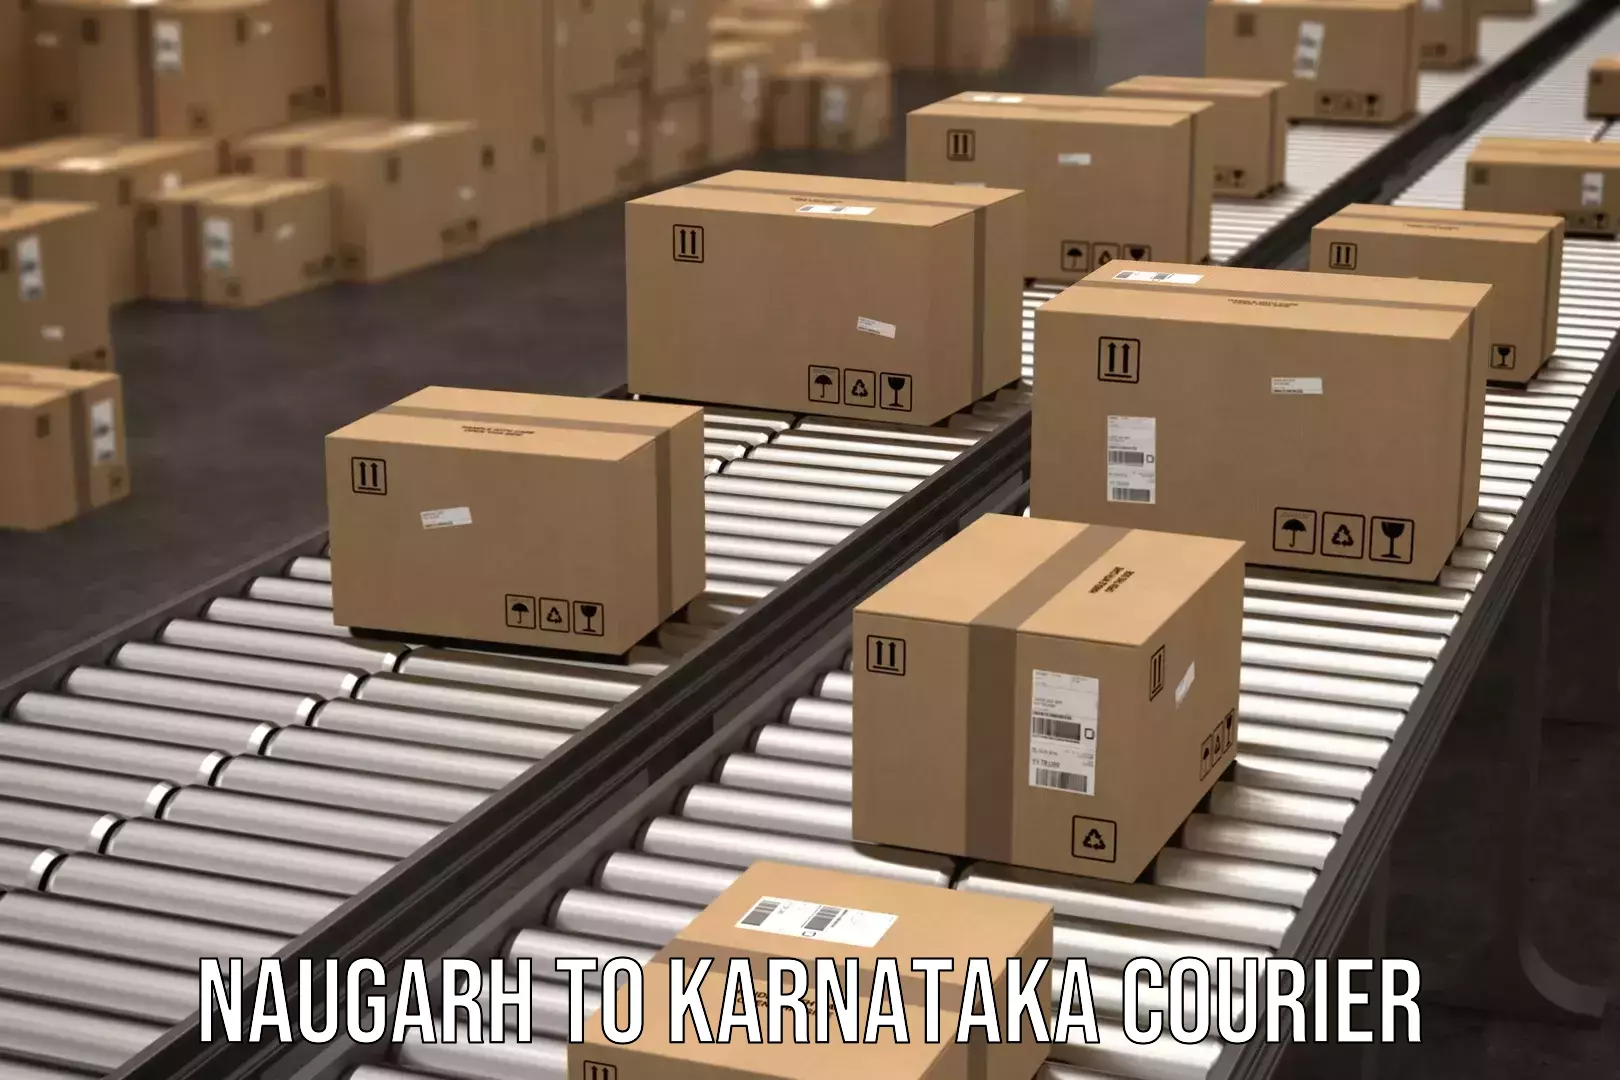 Fast delivery service Naugarh to Karnataka